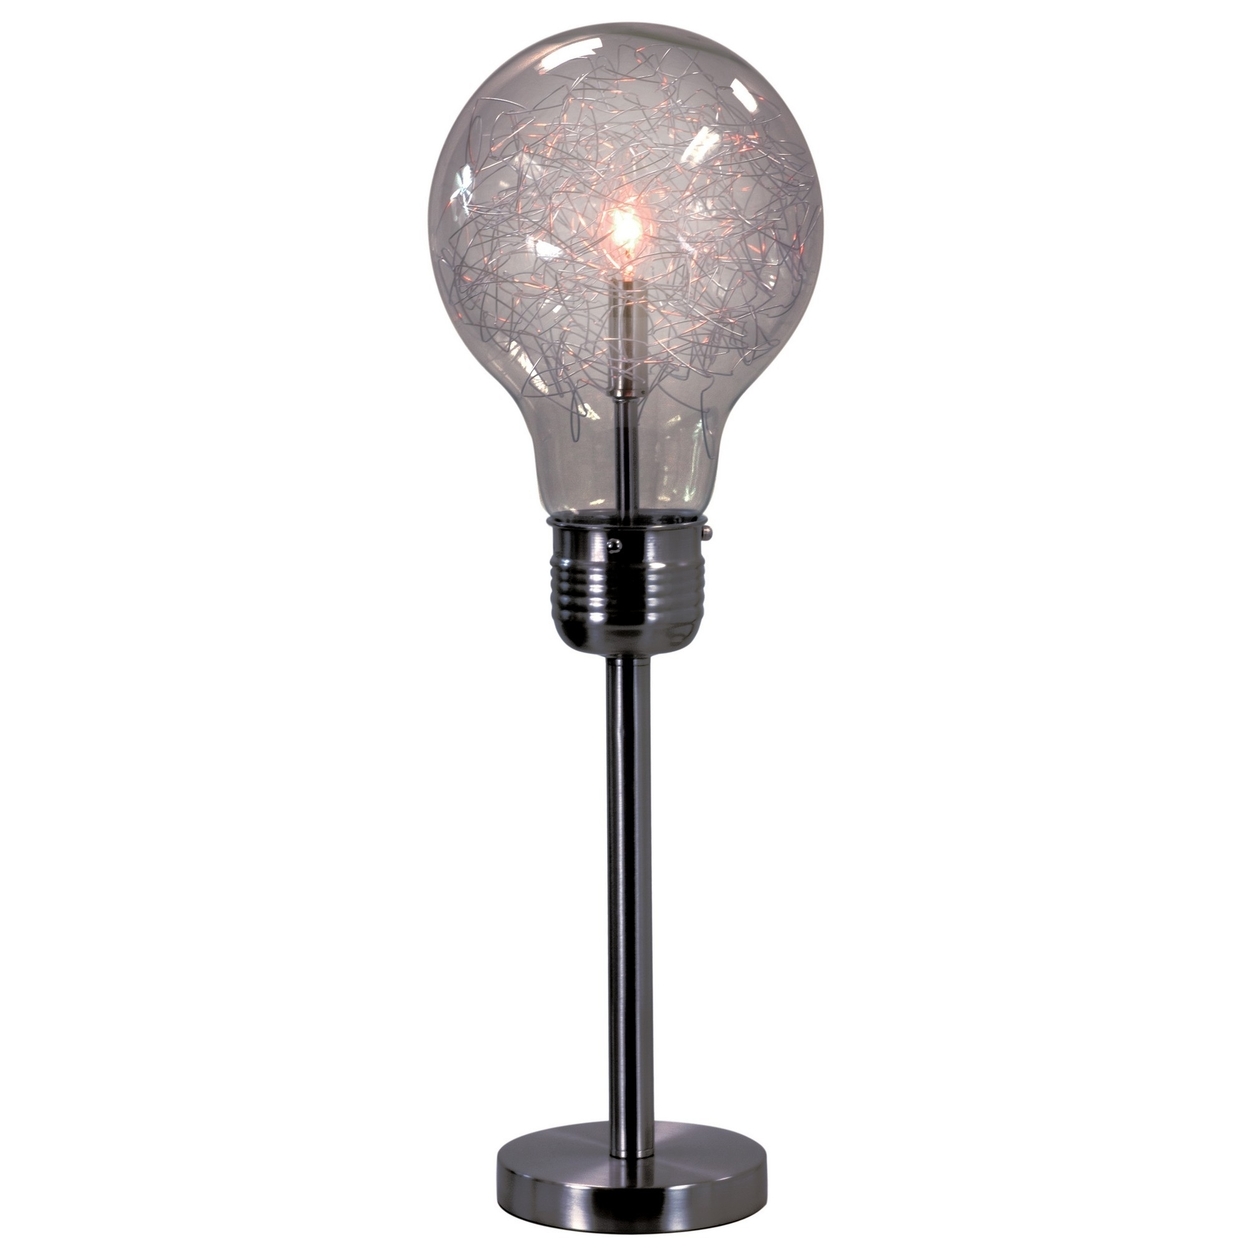 Febe 26 Inch Table Lamp, Large Bulb Shade, Glass, Metal, Black Nickel -Saltoro Sherpi